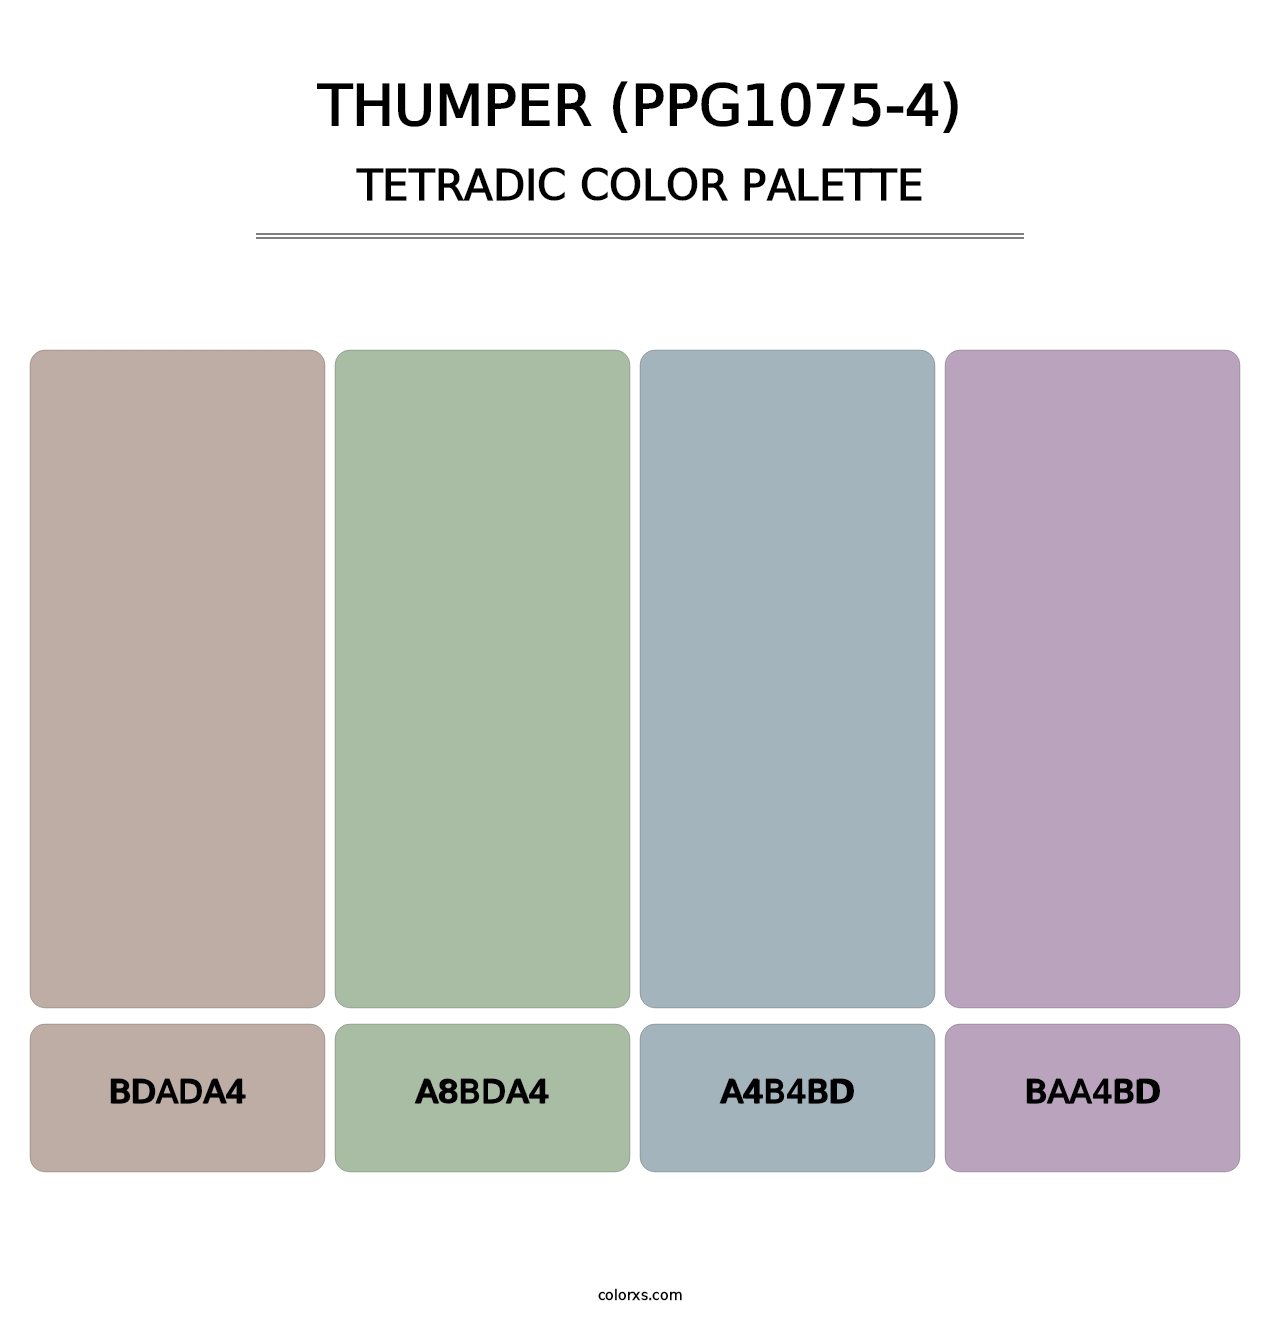 Thumper (PPG1075-4) - Tetradic Color Palette